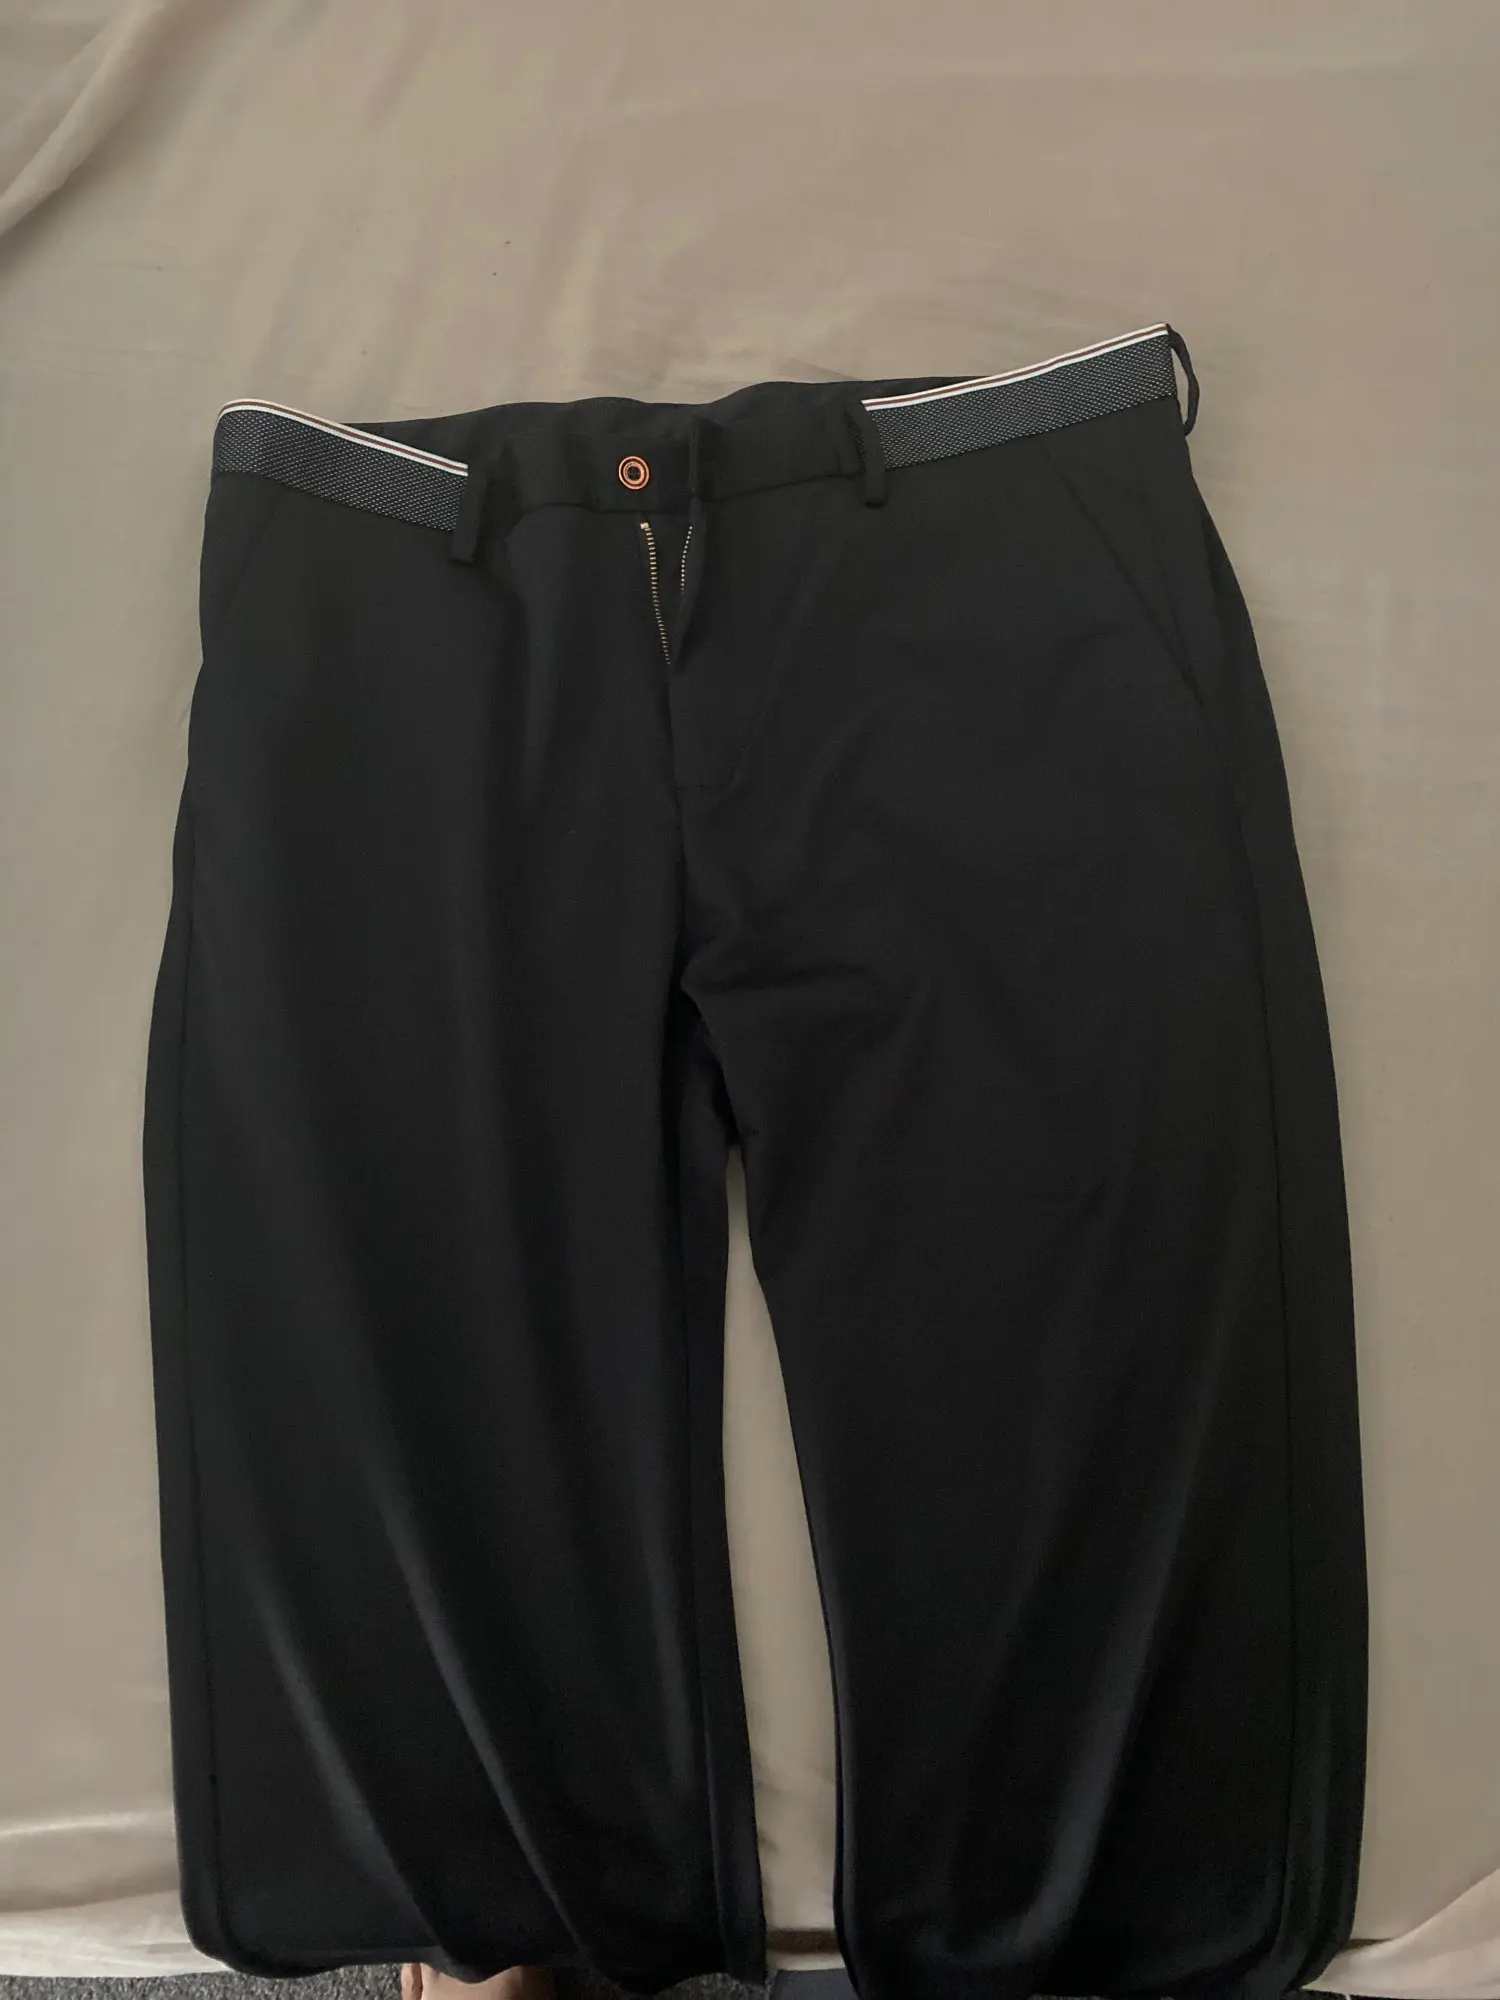 2021 Men's Spring Autumn Fashion Business Casual Long Pants Suit Pants Male Elastic Straight Formal Trousers Plus Big Size 28-40 photo review